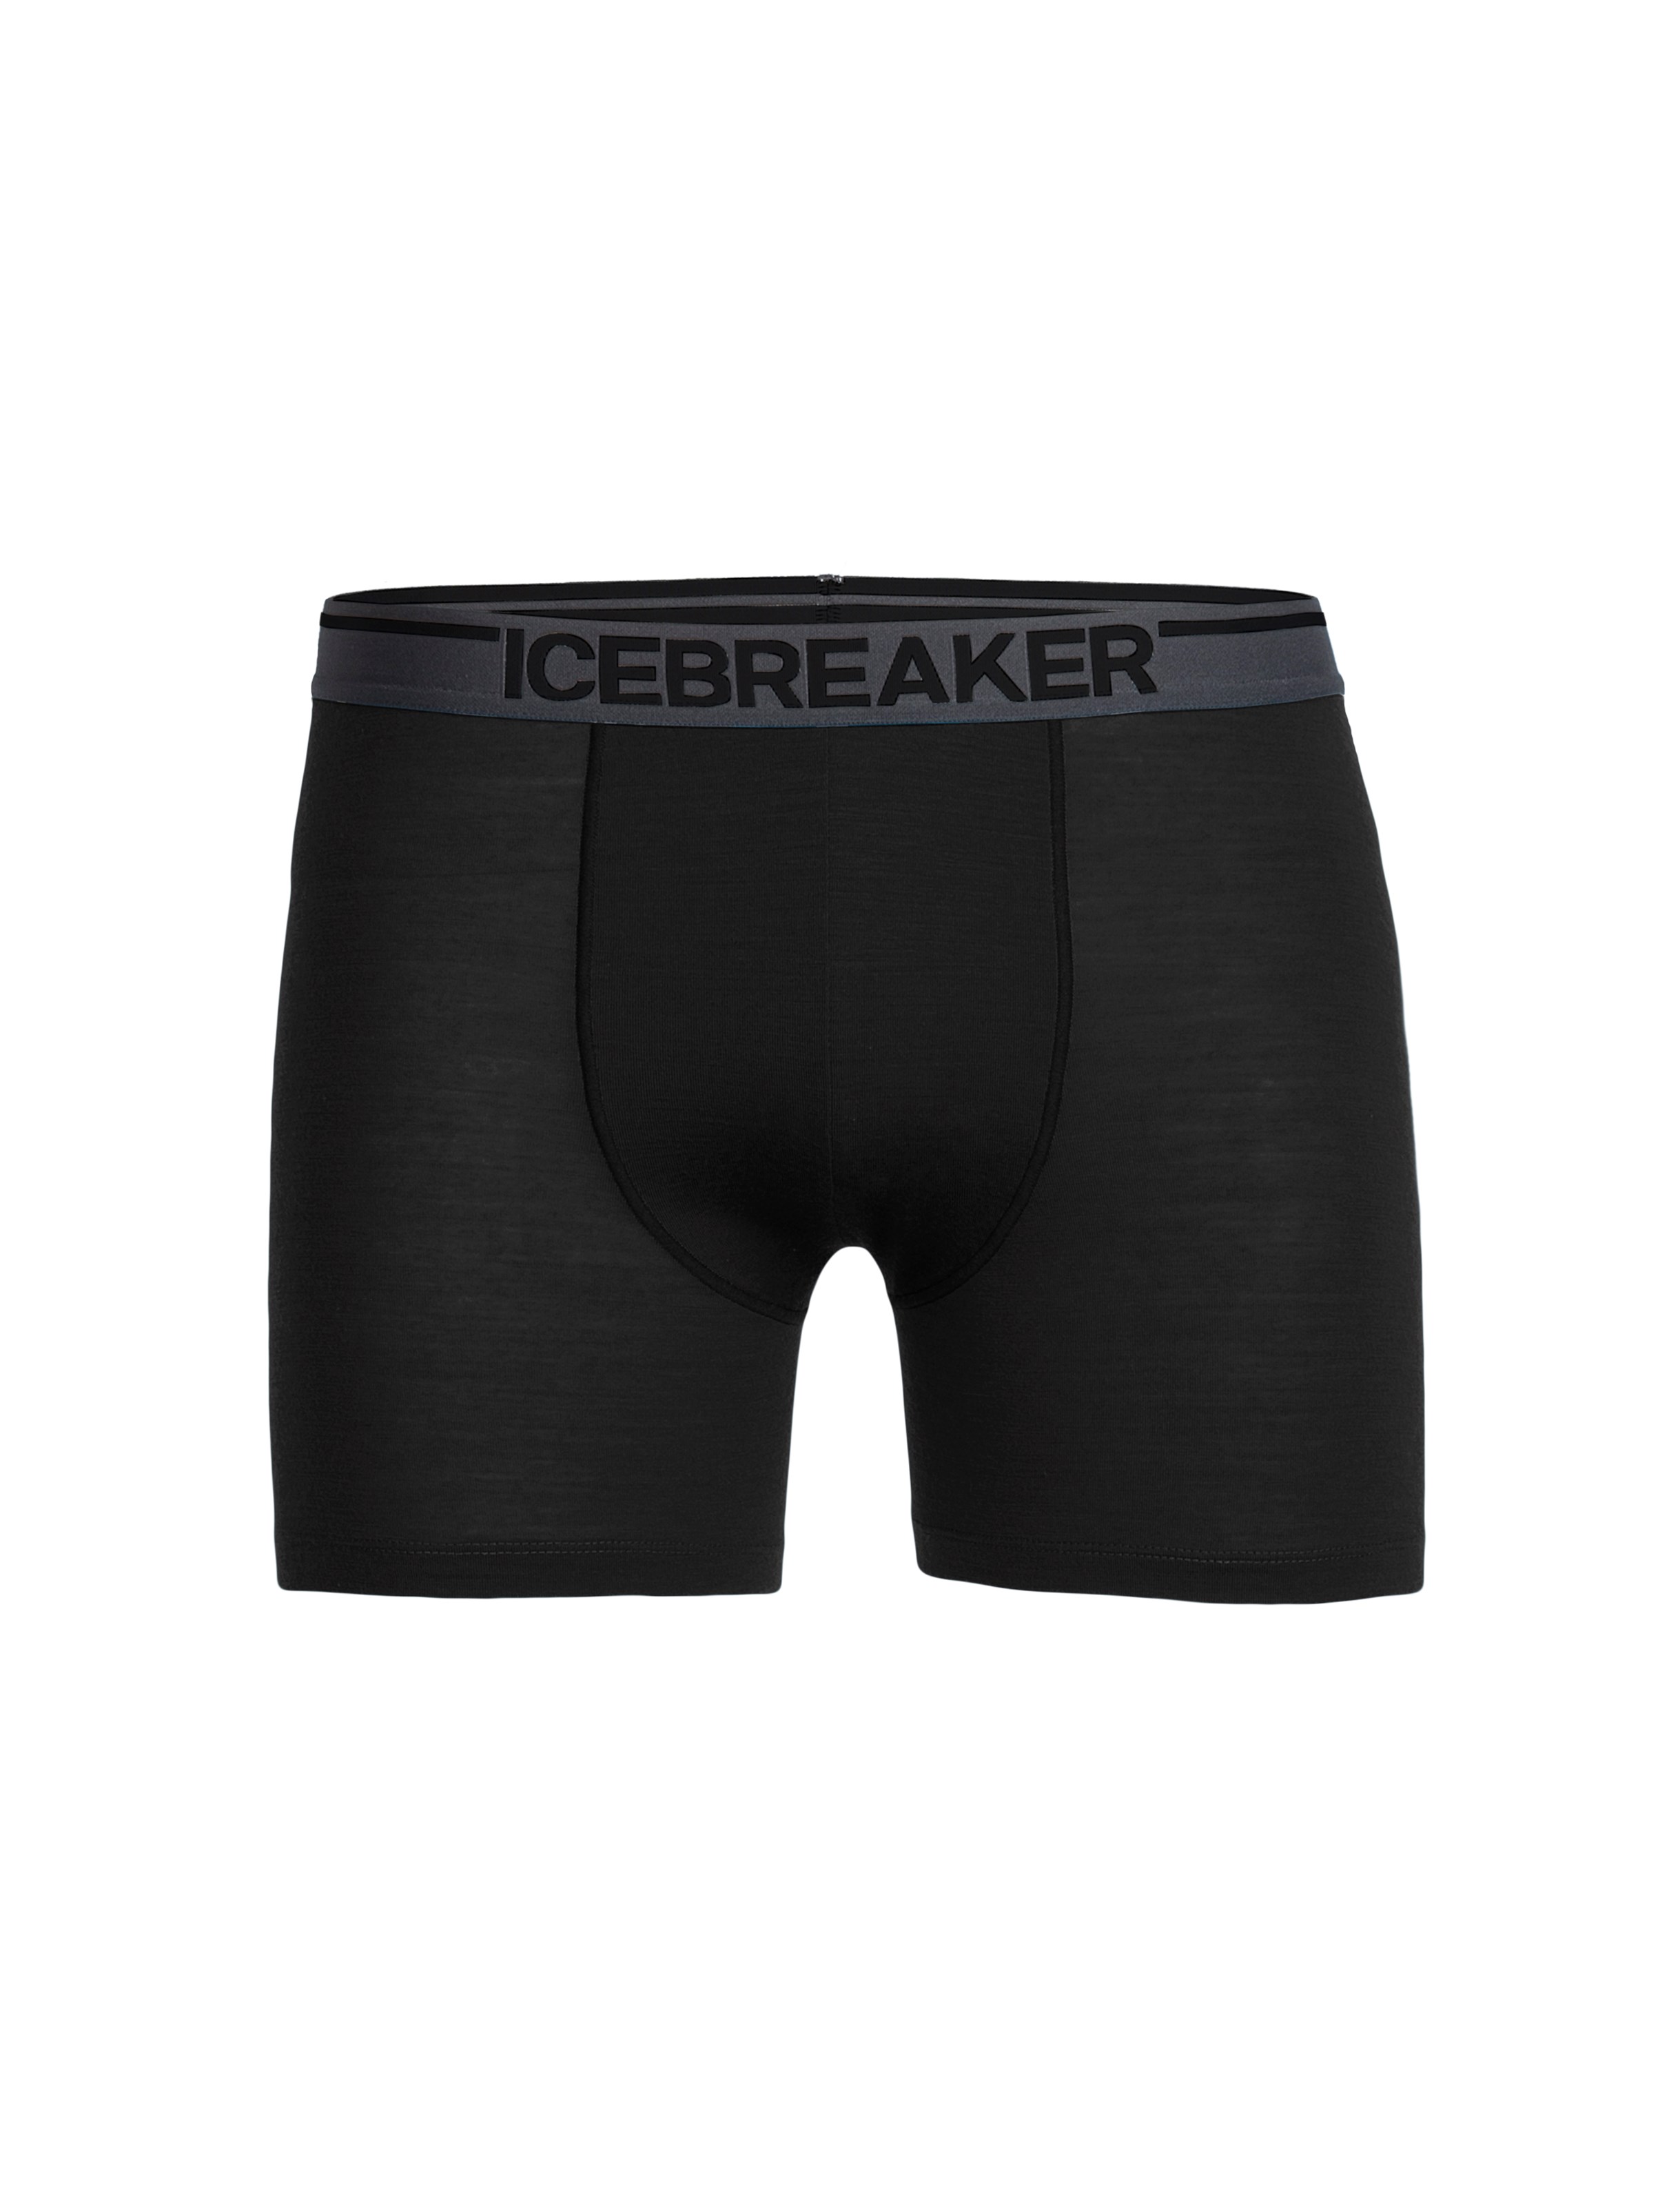 Icebreaker Anatomica Boxers, boxershorts herre Black/Monsoon utg. 103029007 S 2020